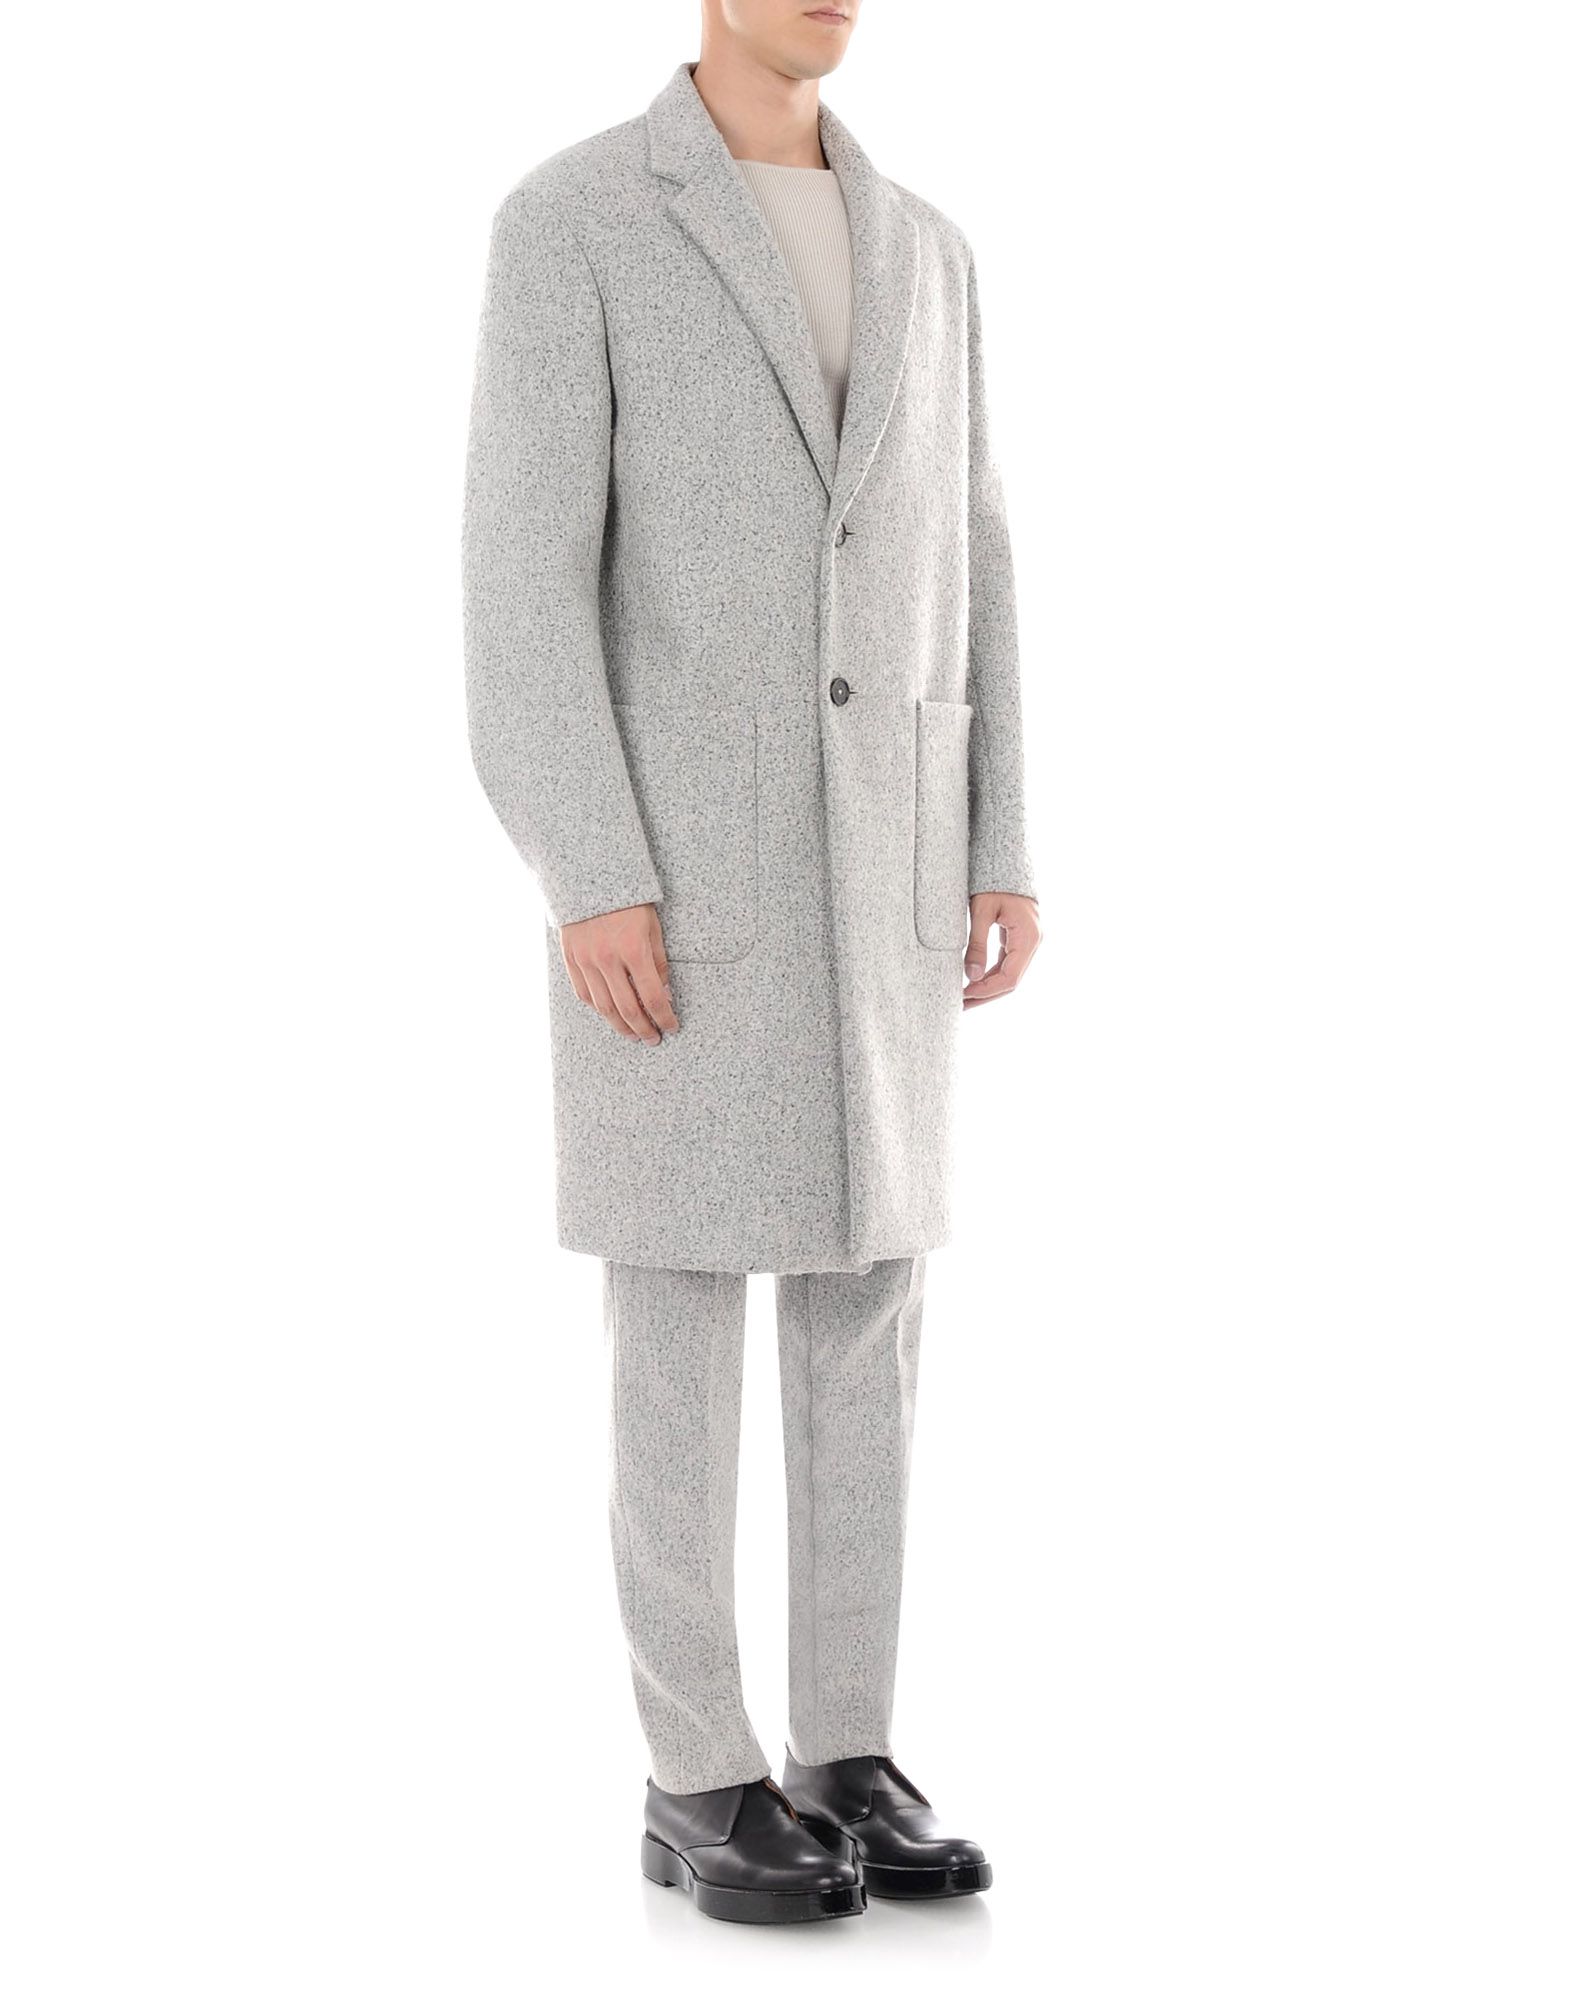 Coat Men - Coats Men on Jil Sander Online Store